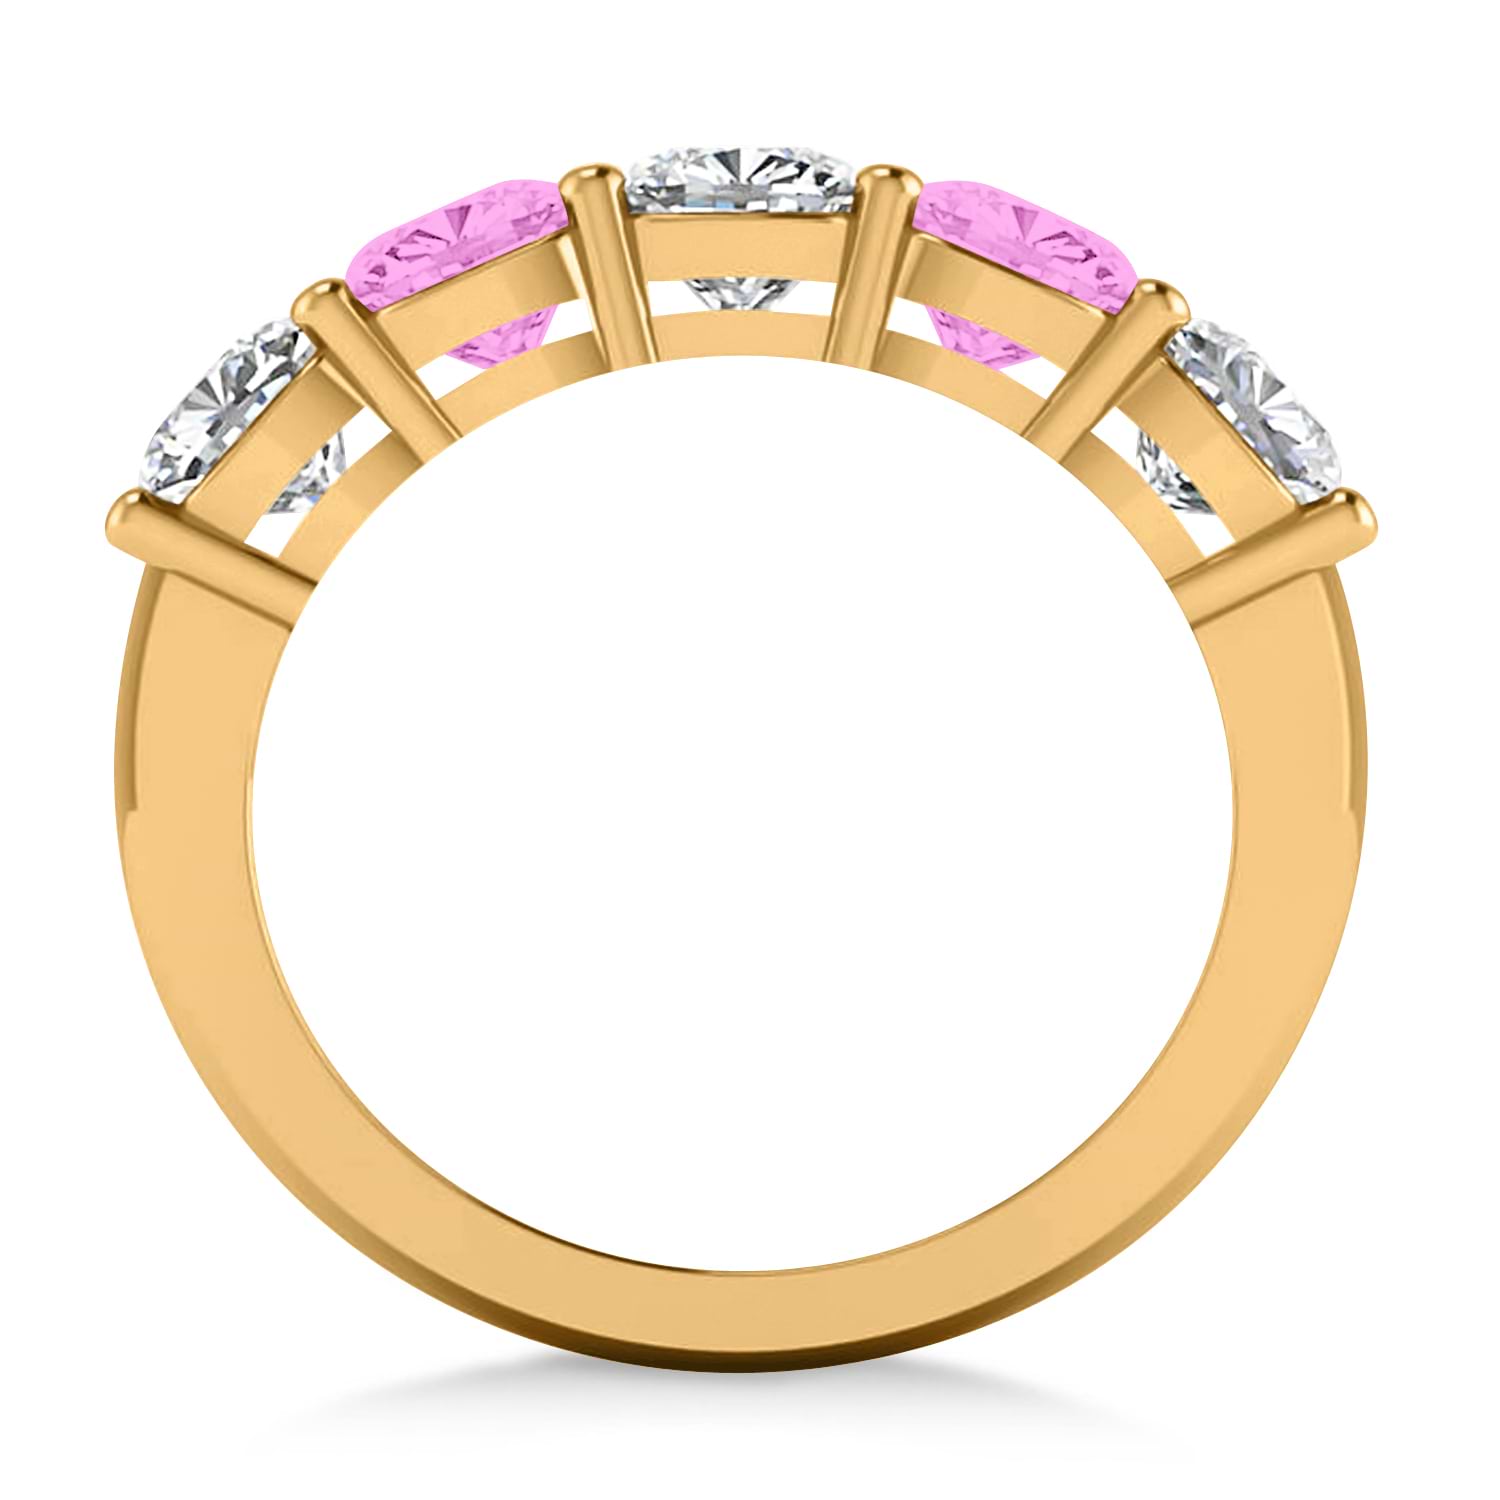 Cushion Diamond & Pink Sapphire Five Stone Ring 14k Yellow Gold (2.70ct)